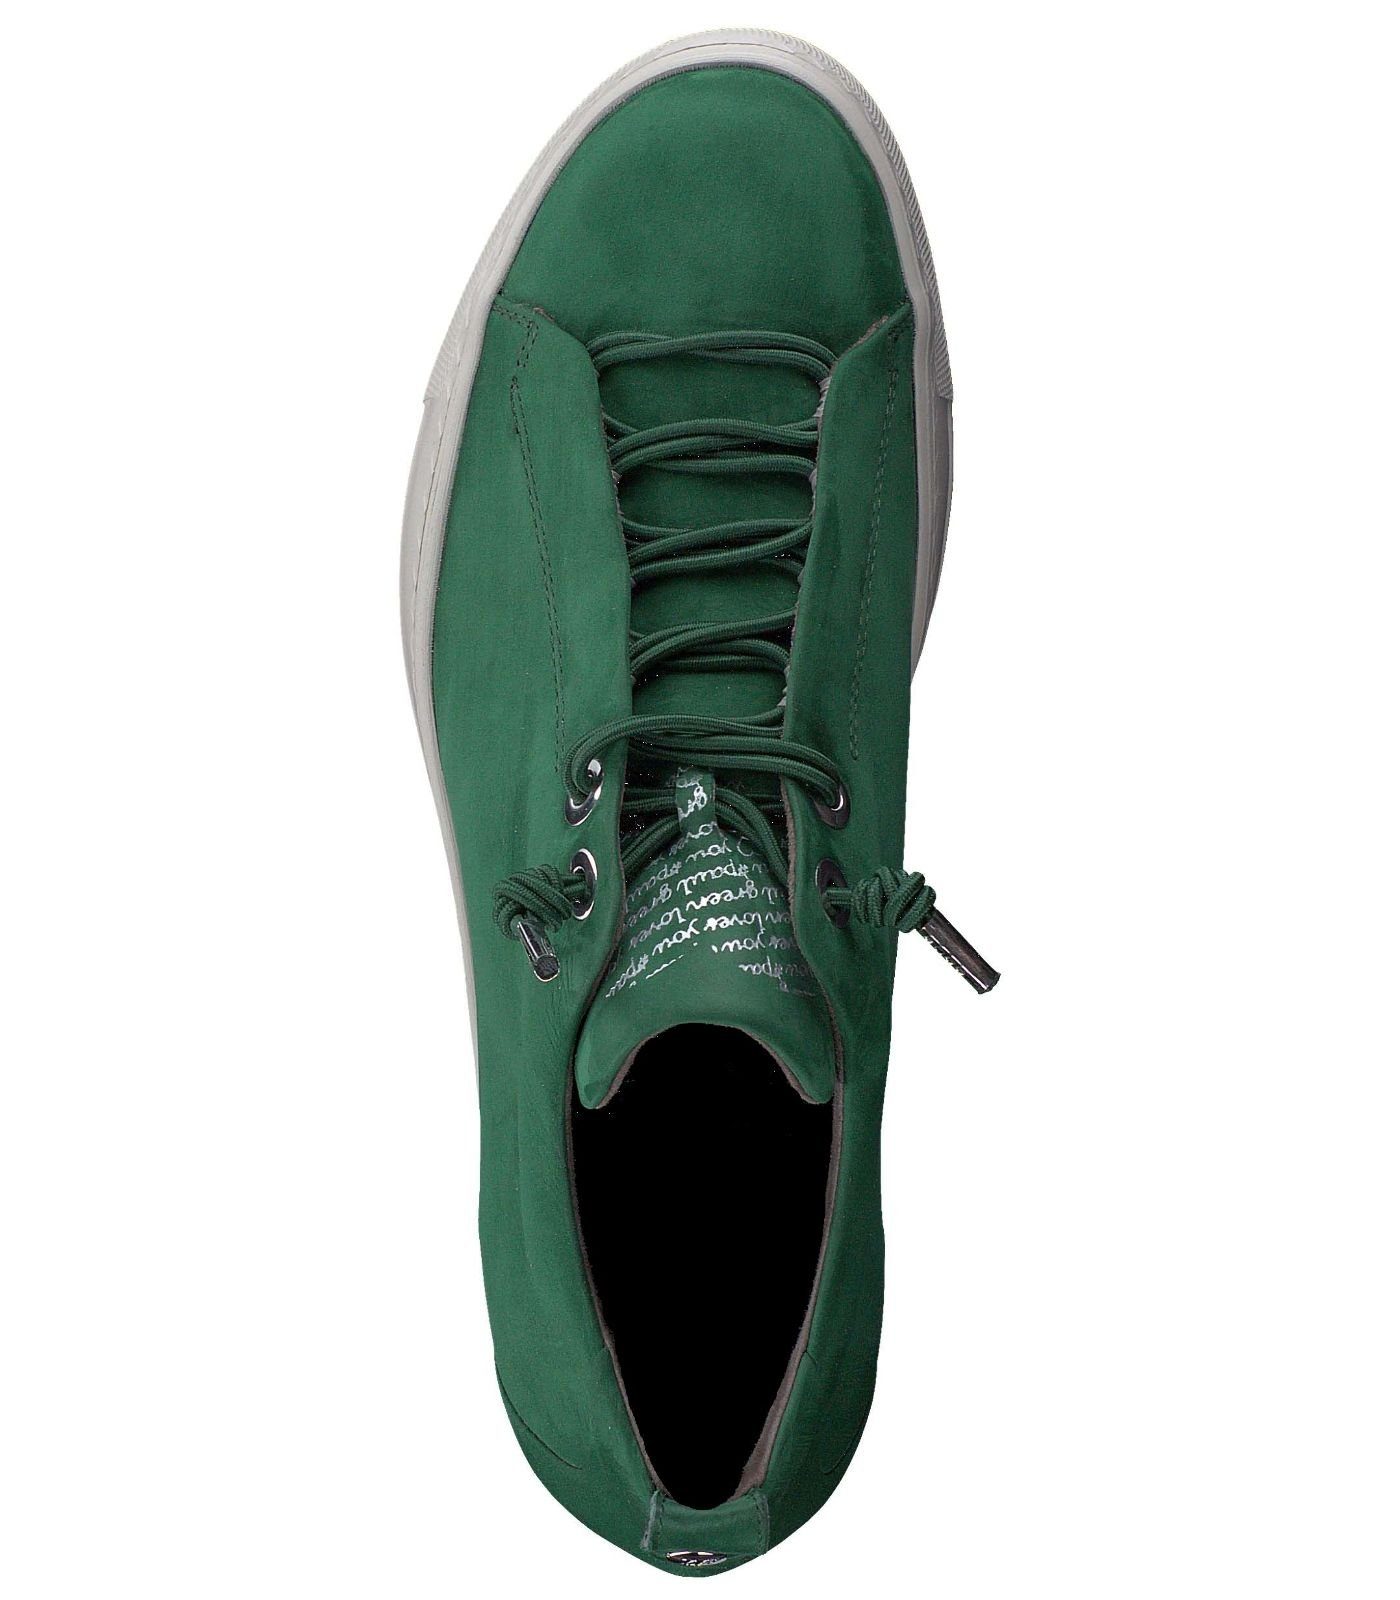 Grün Green Paul Plateausneaker Sneaker Nubukleder